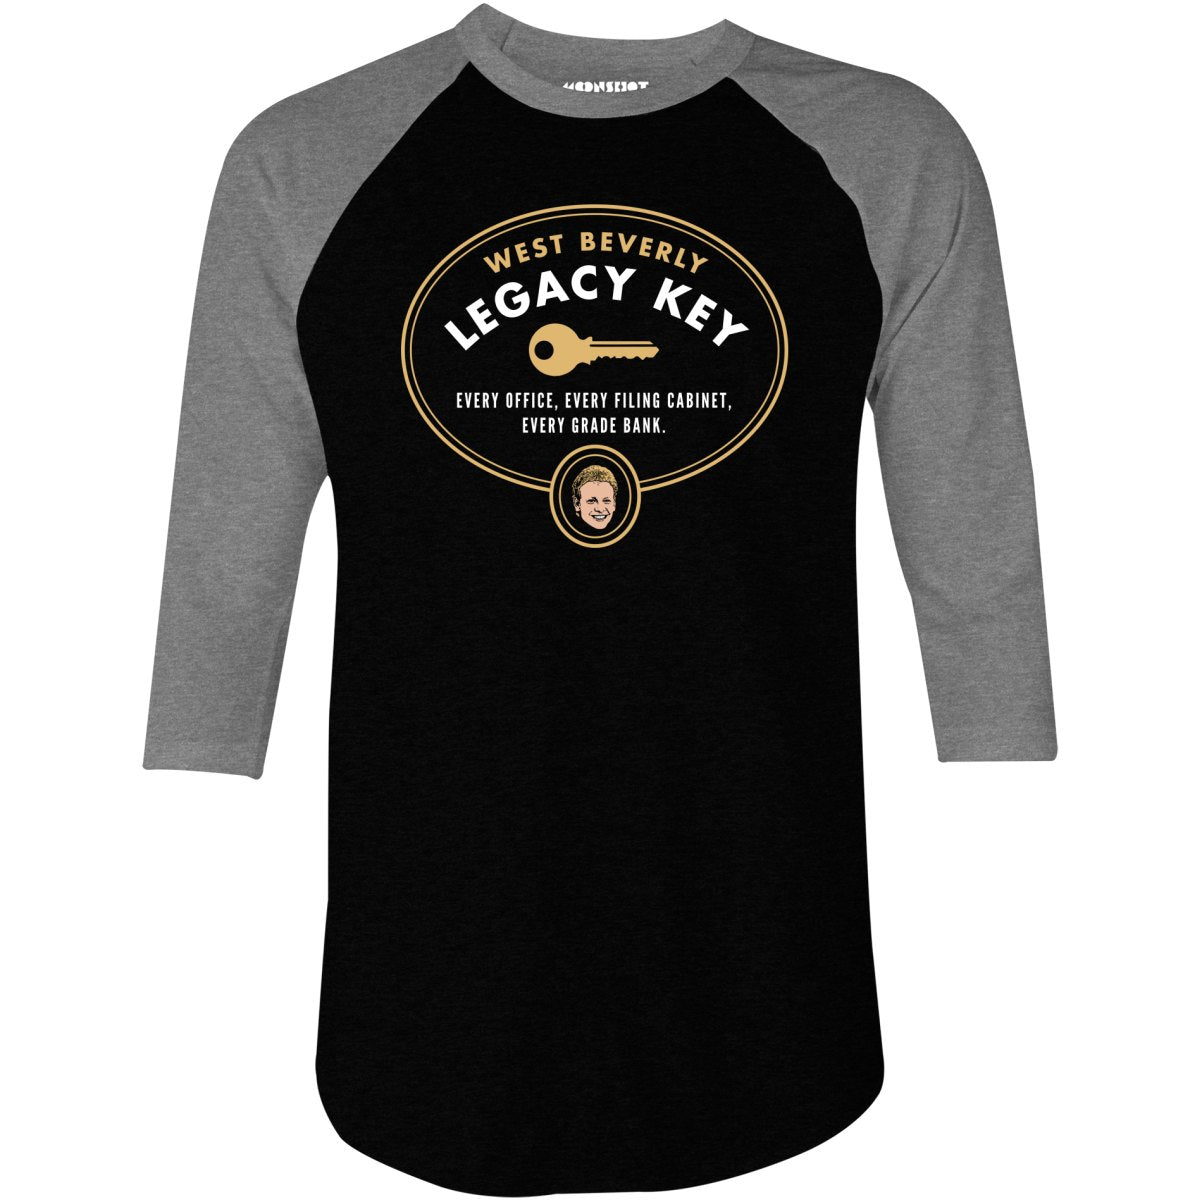 West Beverly Legacy Key - 90210 - 3/4 Sleeve Raglan T-Shirt